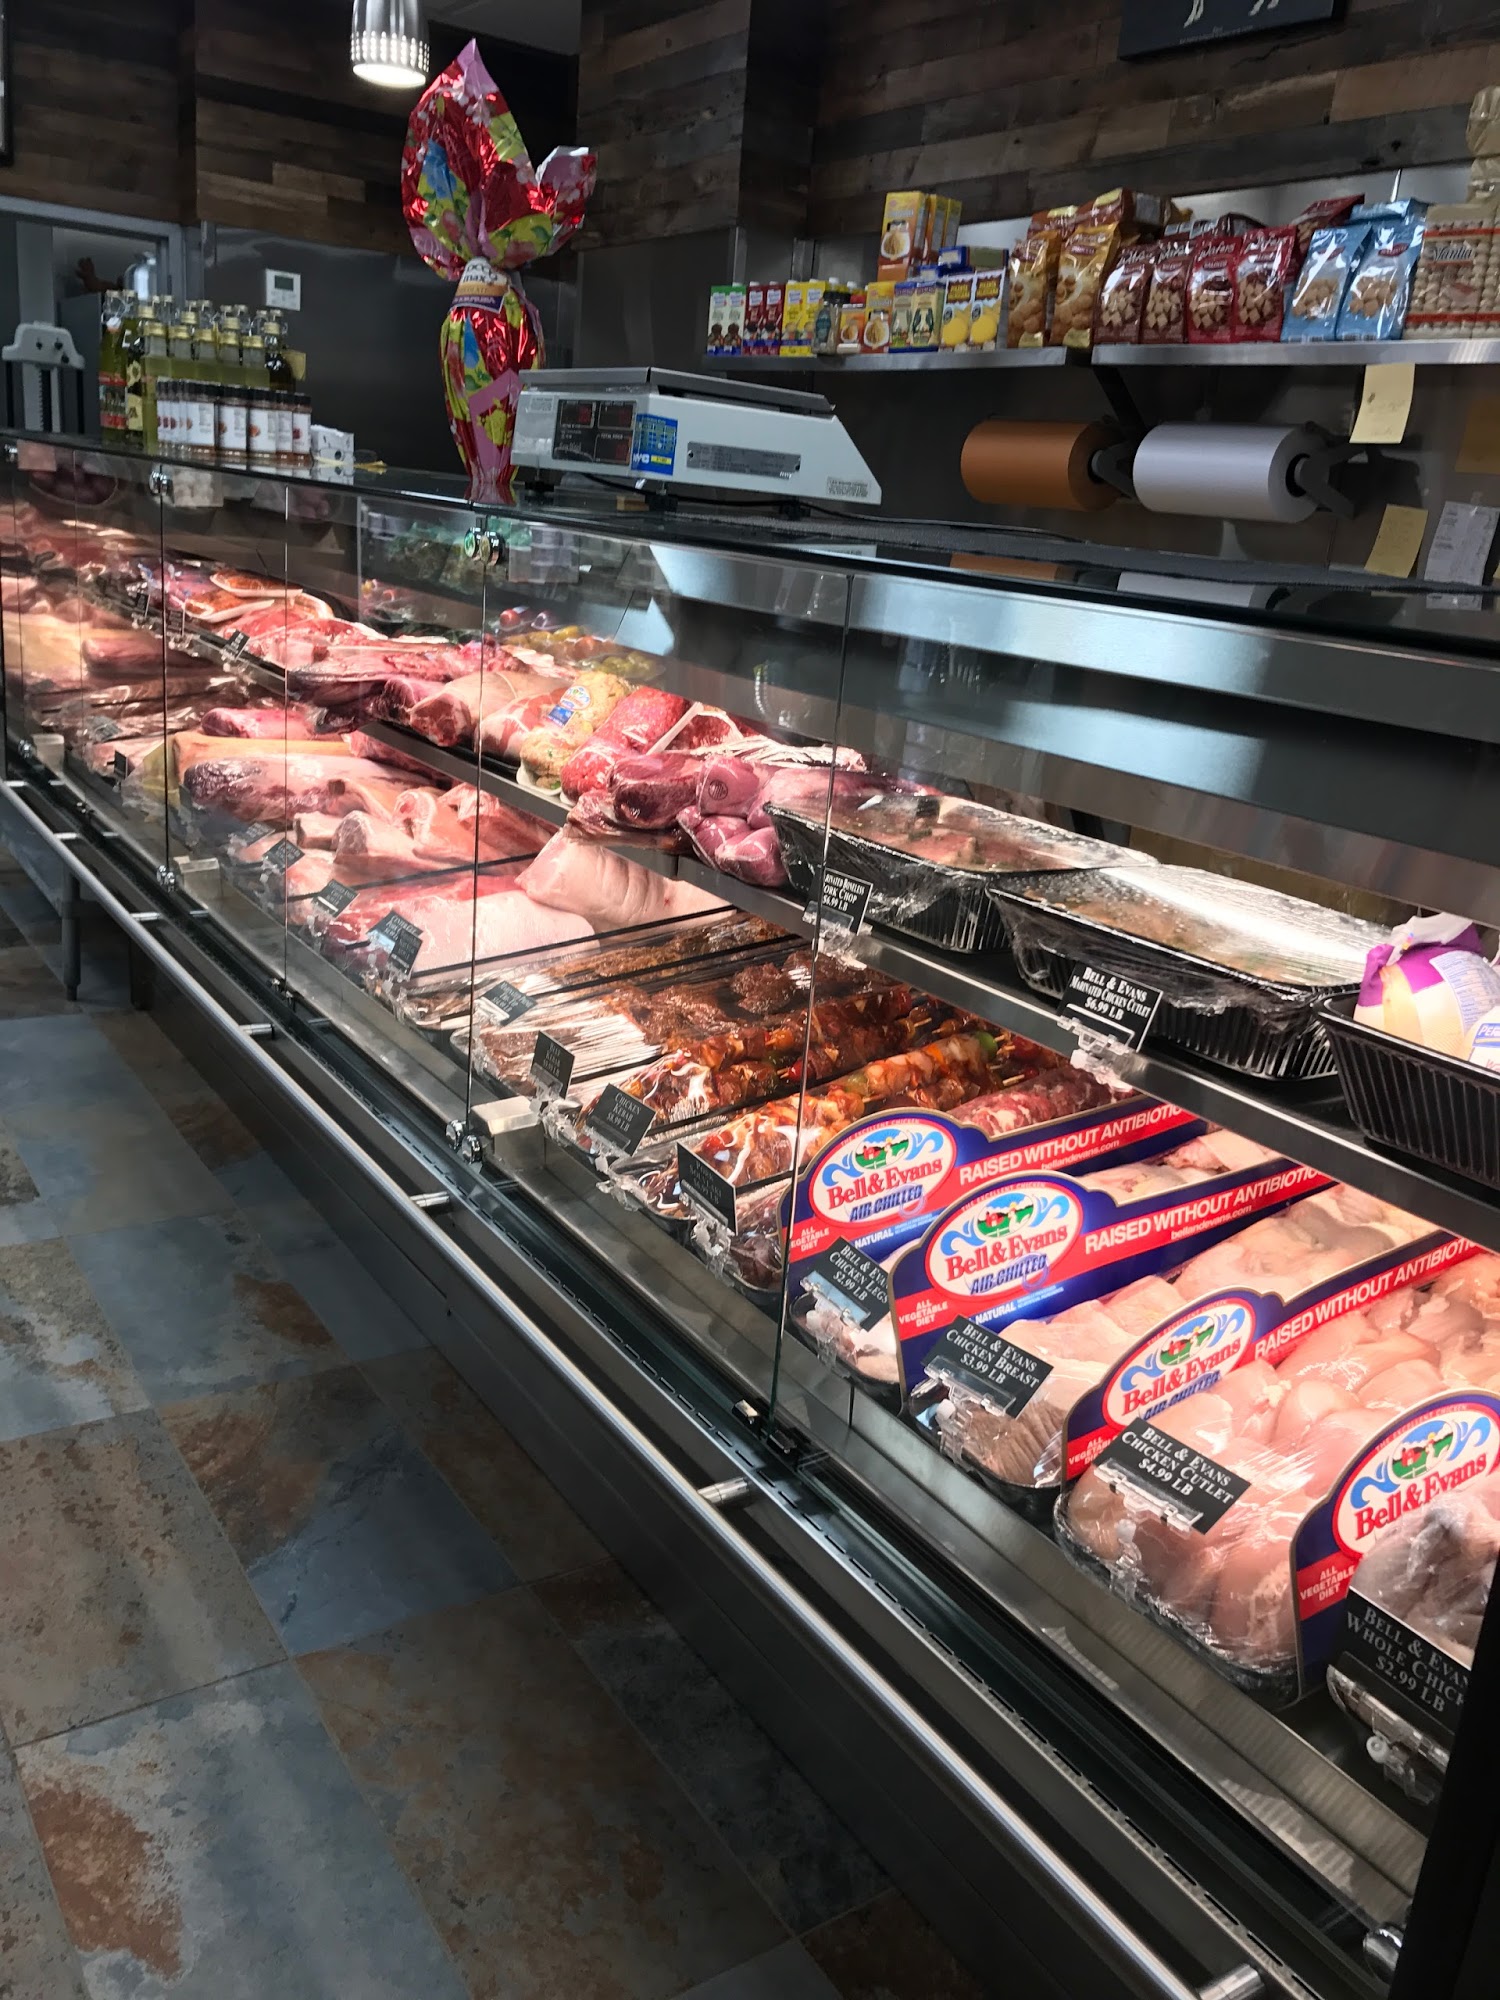 Metro Meat Market